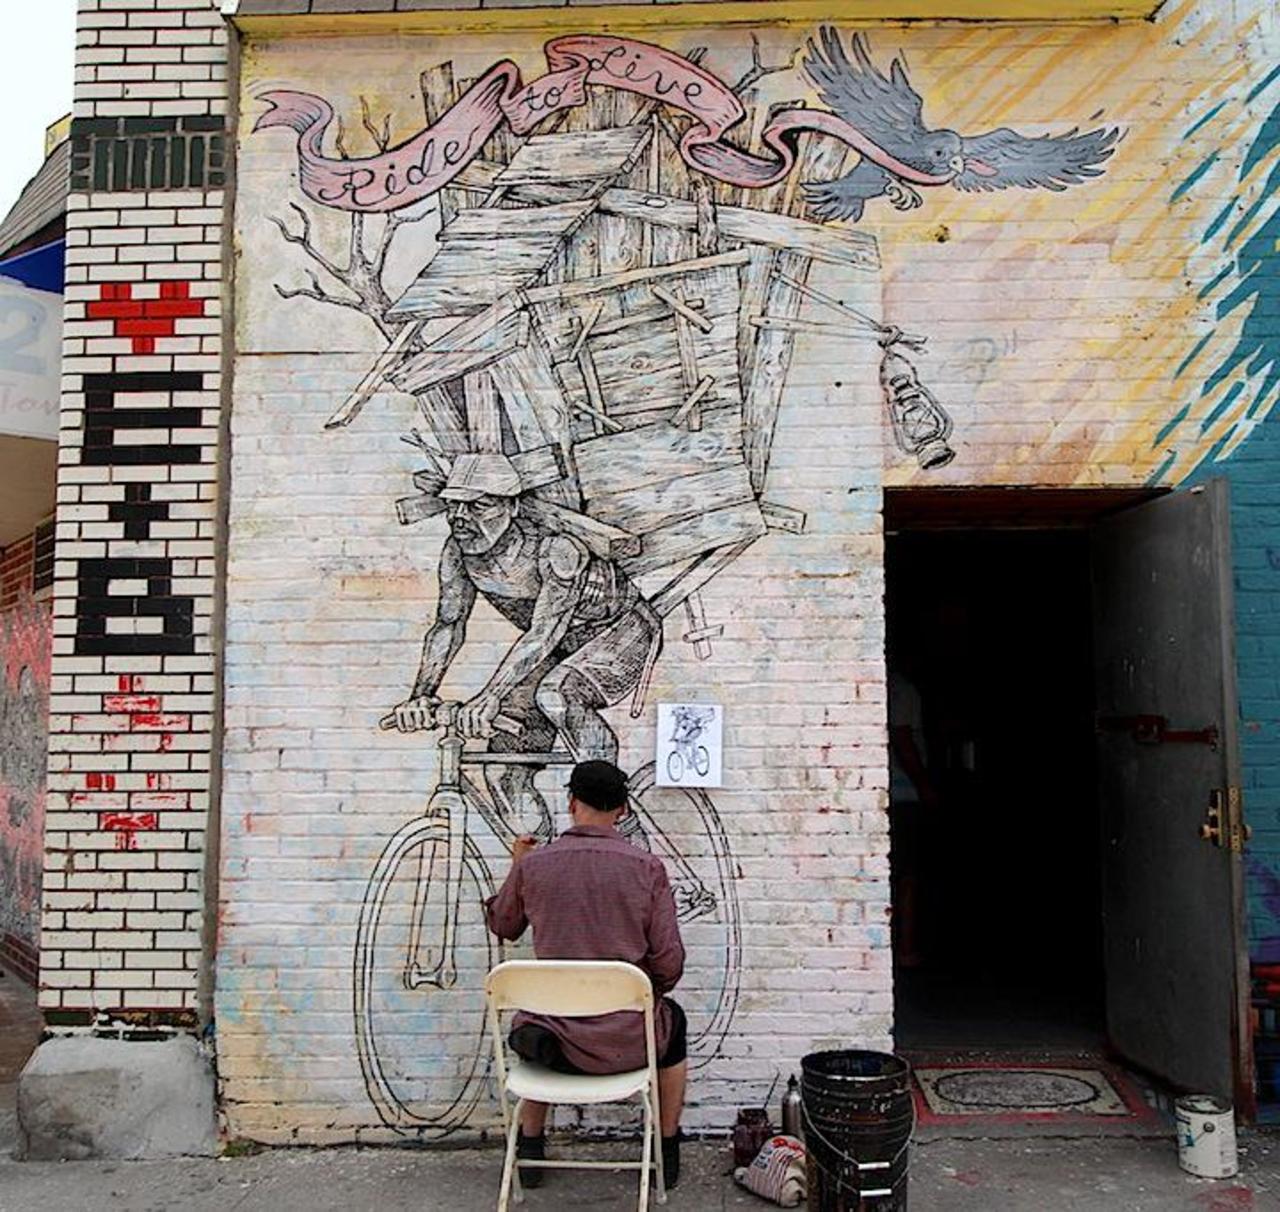 StreetArt News
Chris Cardinale in #NewYork #USA 
#StreetArt #Art #UrbanArt #Graffiti http://t.co/N2d3lz6NpC